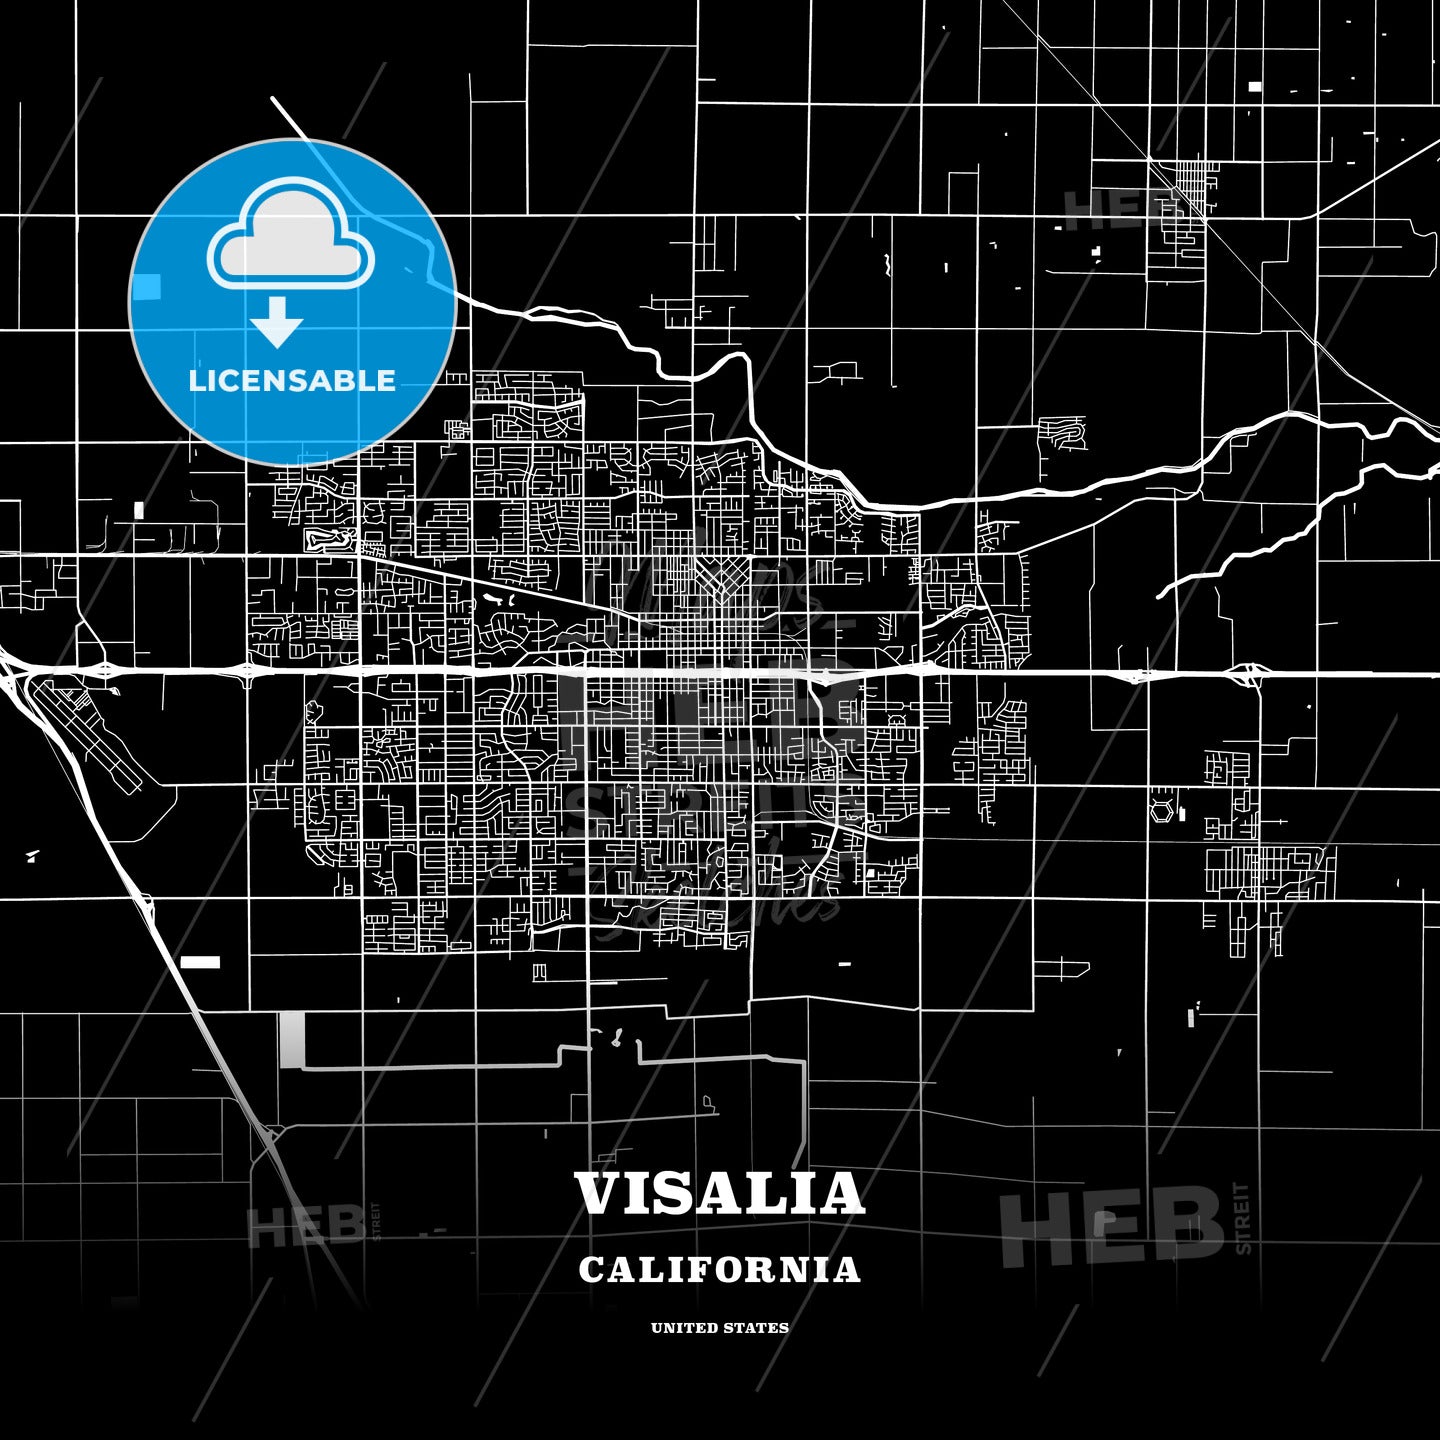 Visalia, California, USA map